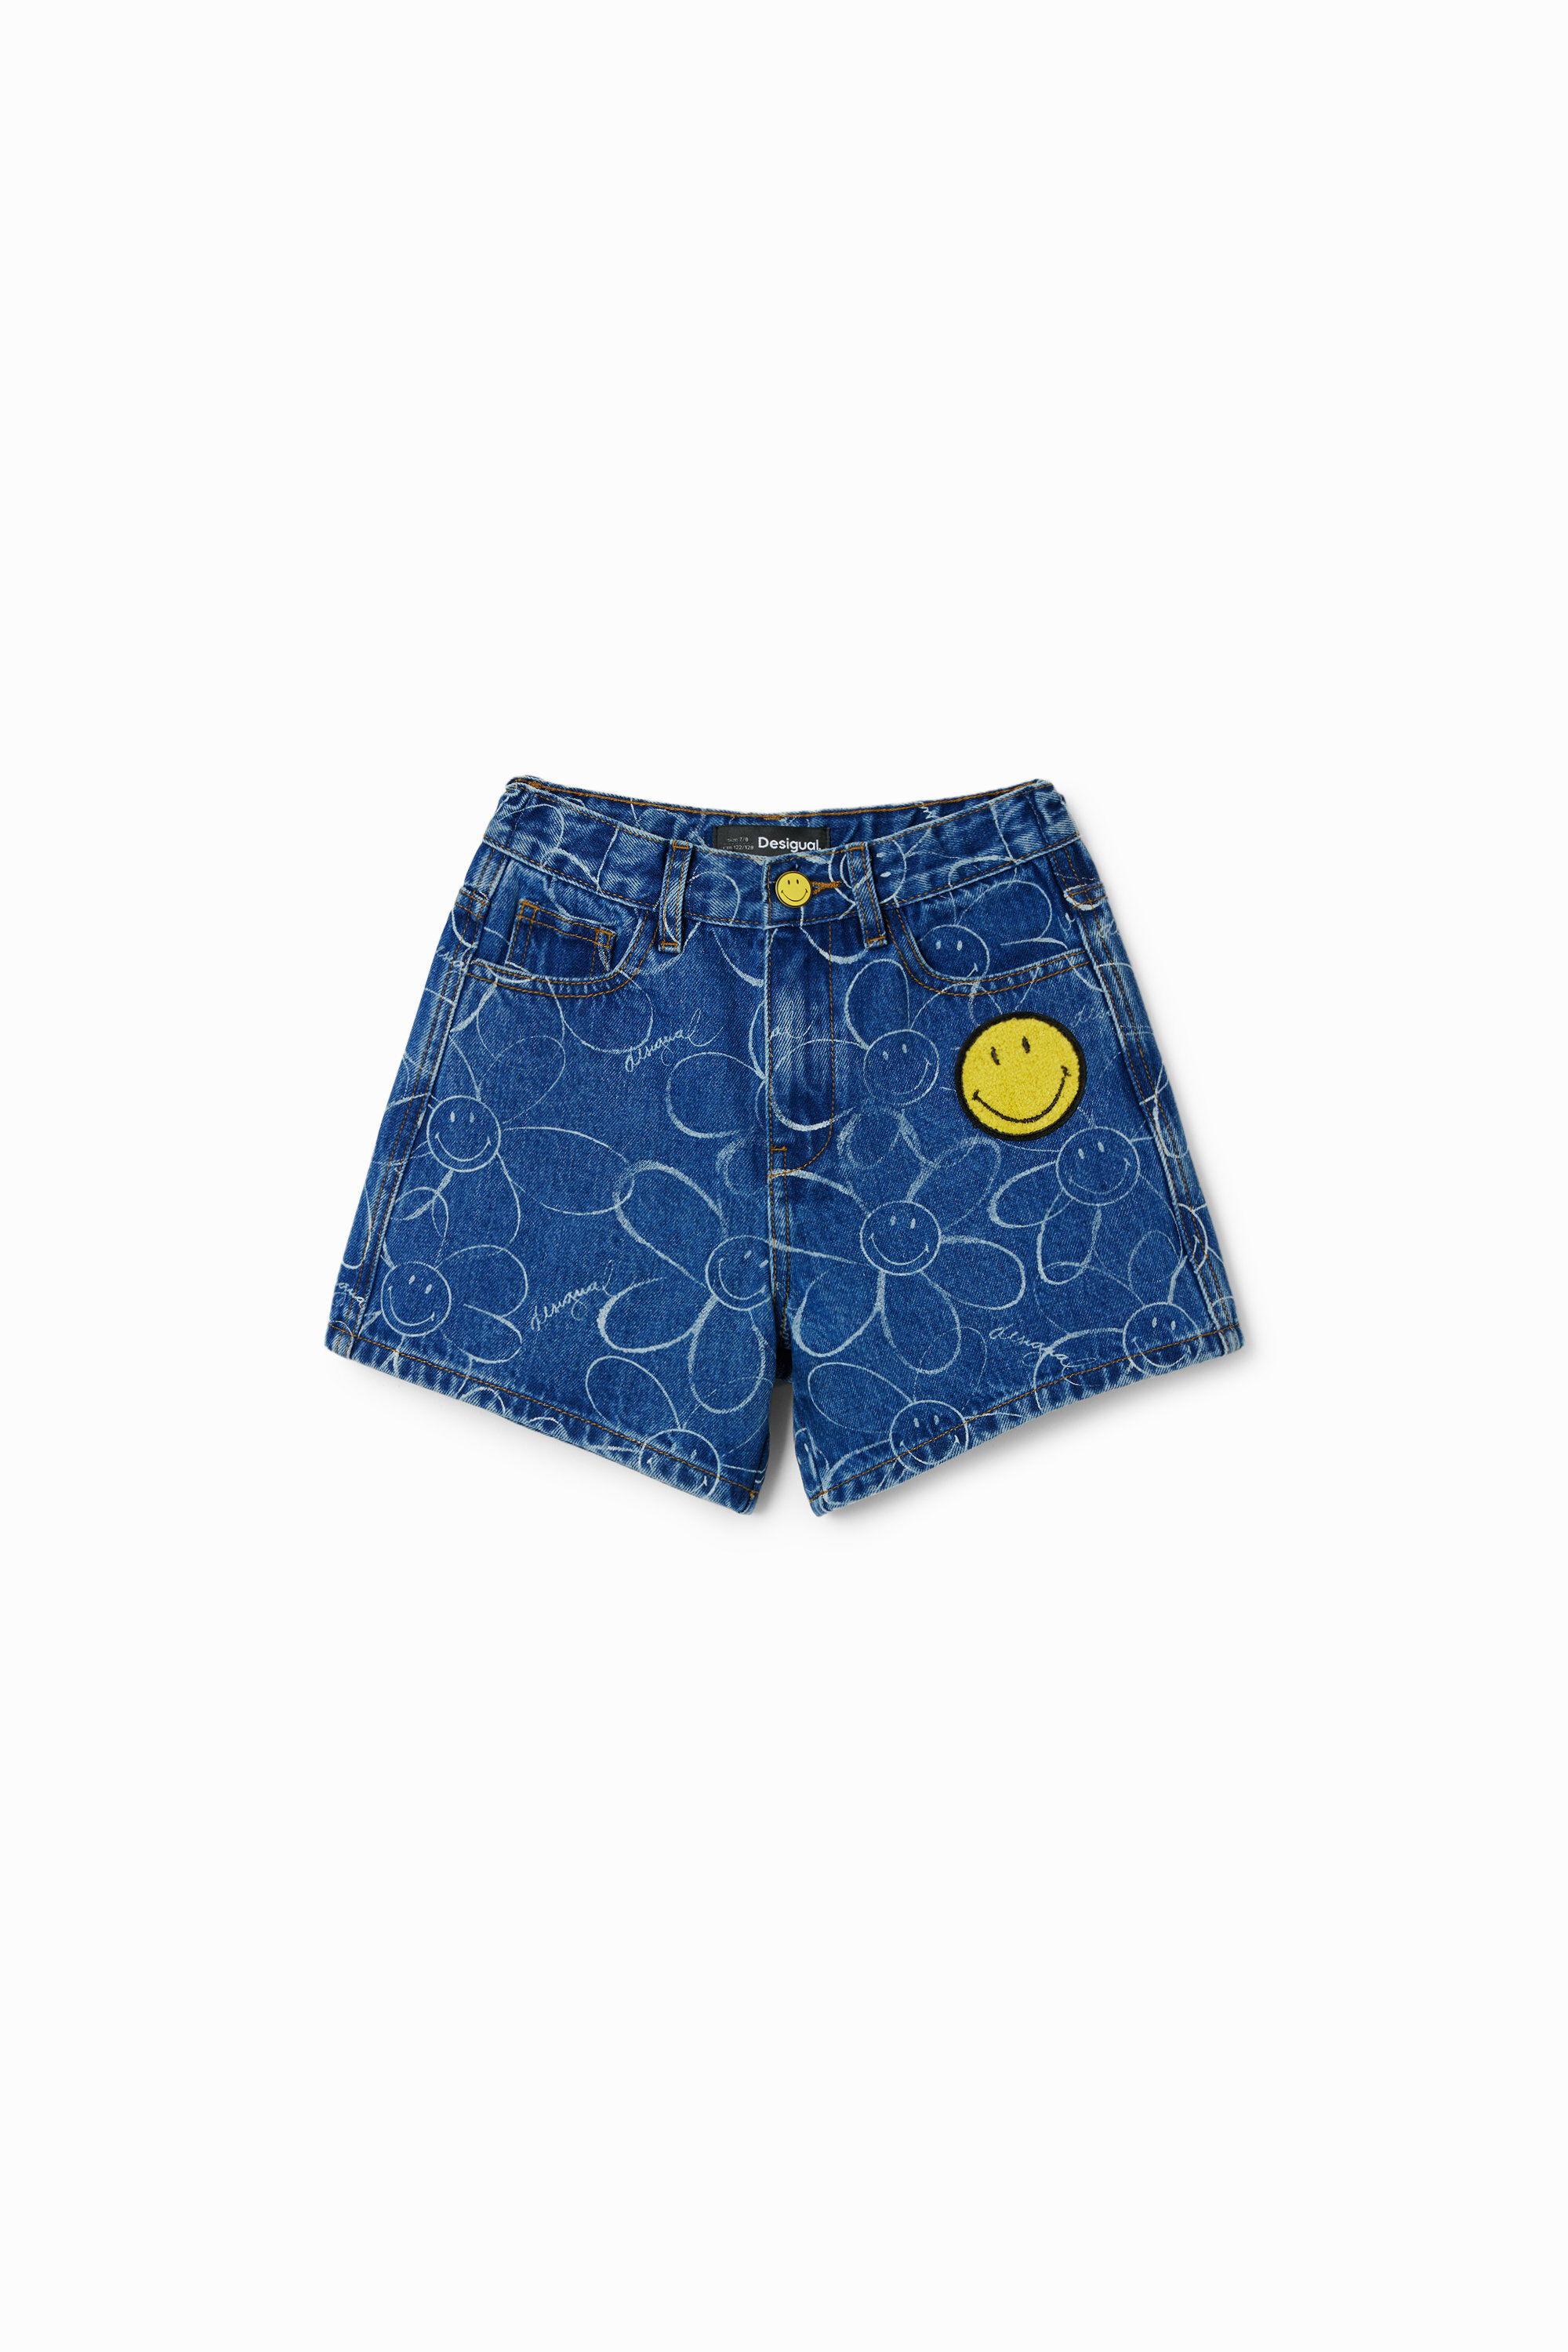 Smiley Originals ® denim shorts